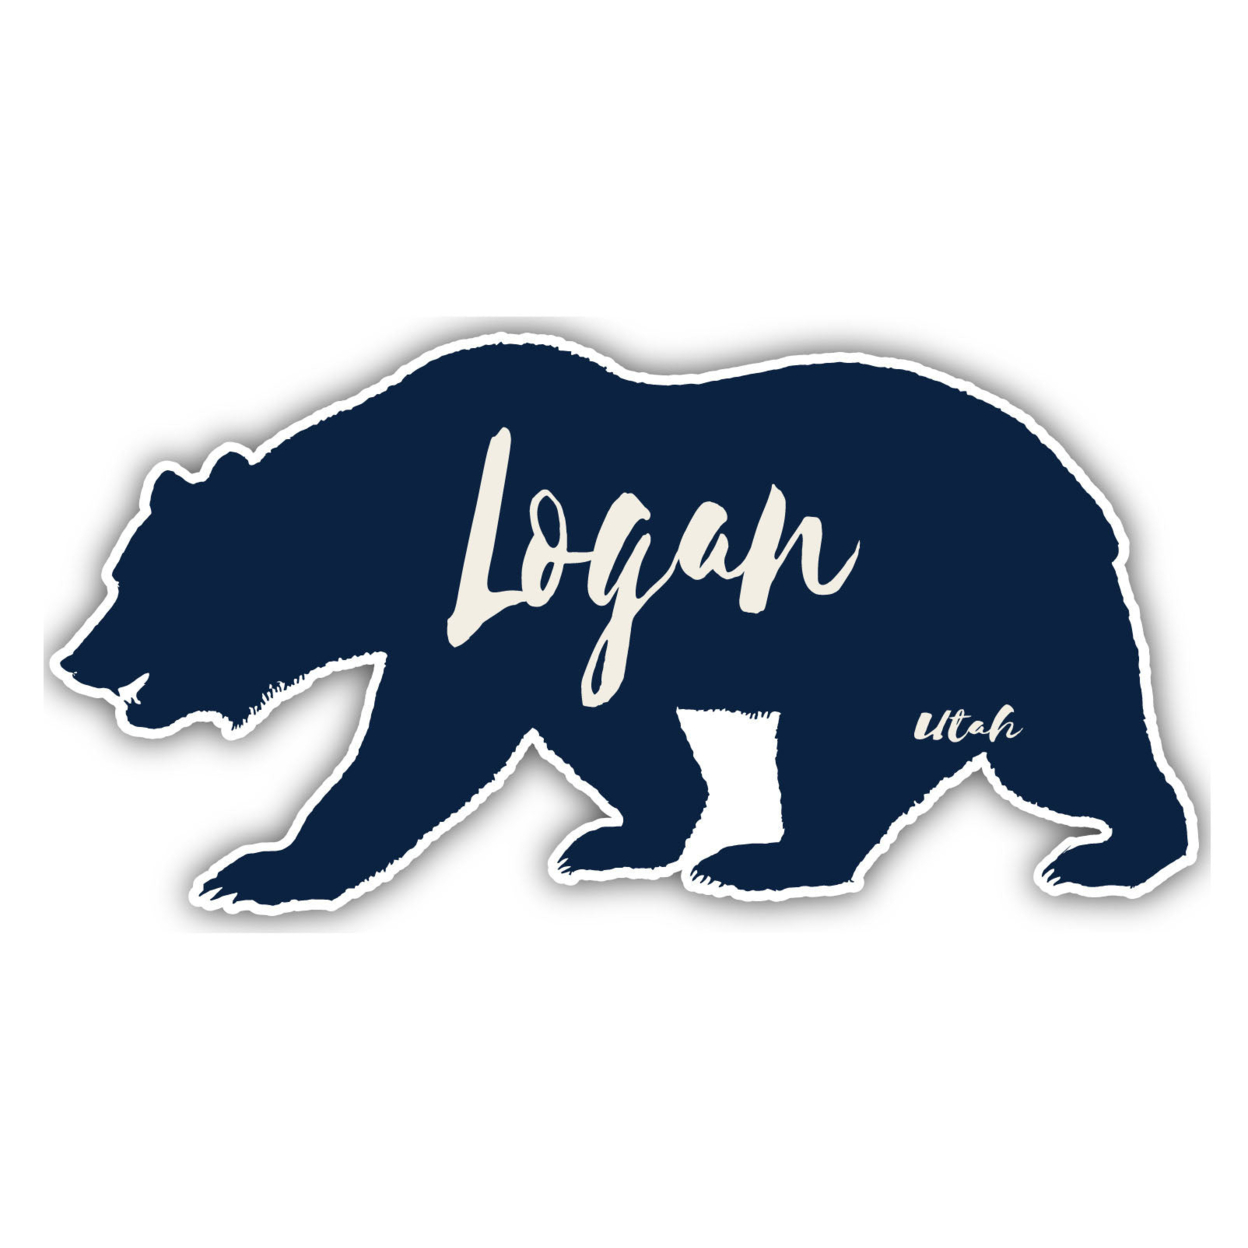 Logan Utah Souvenir Decorative Stickers (Choose Theme And Size) - 4-Inch, Bear